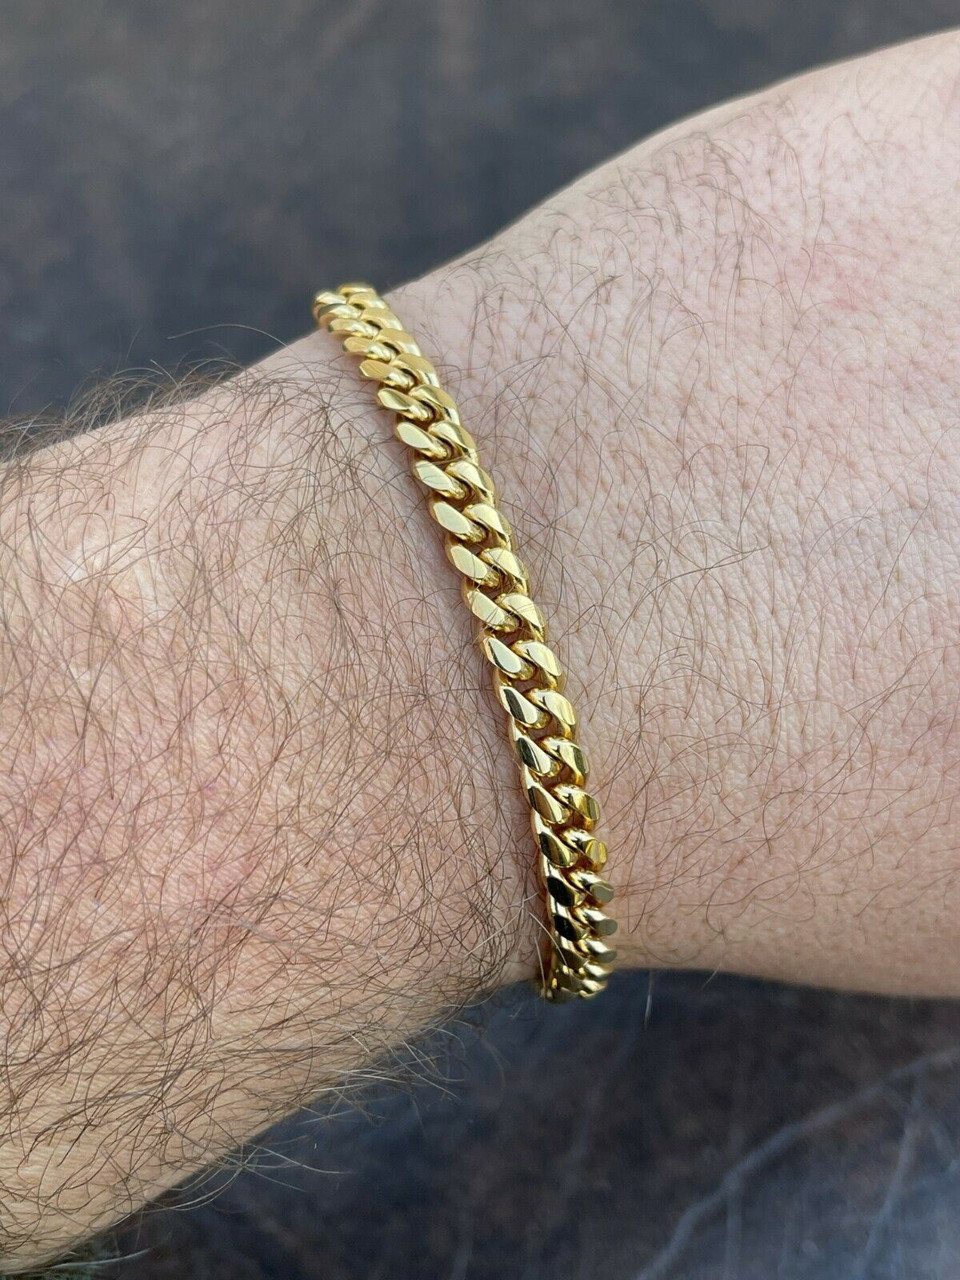 8 Men's Miami Cuban Link Bracelet in 14k Yellow Gold (6 mm)